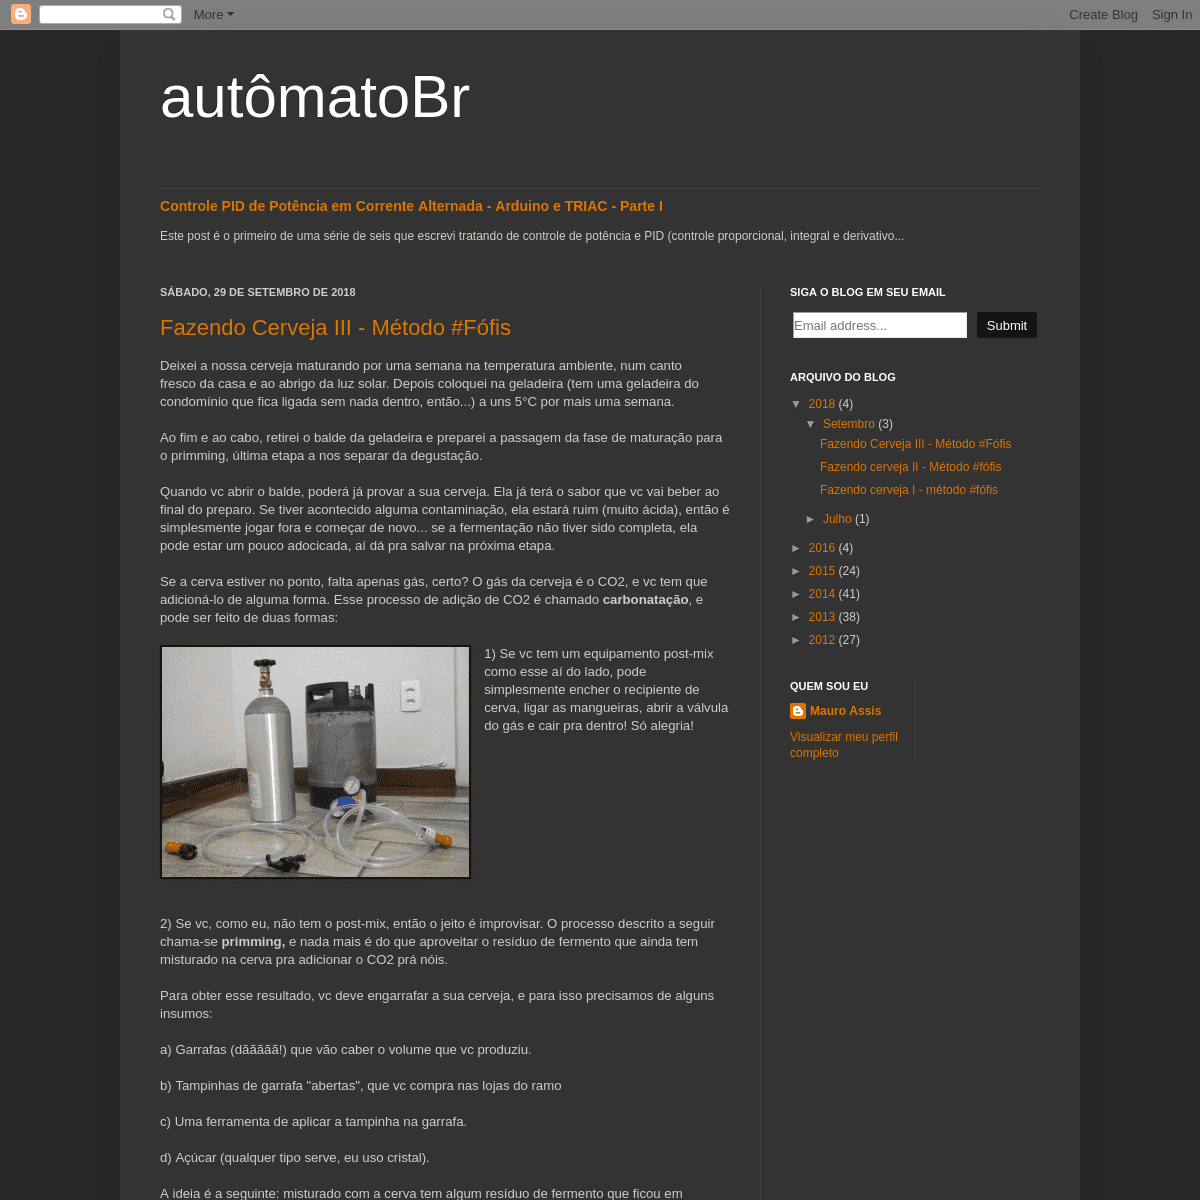 A complete backup of automatobr.blogspot.com